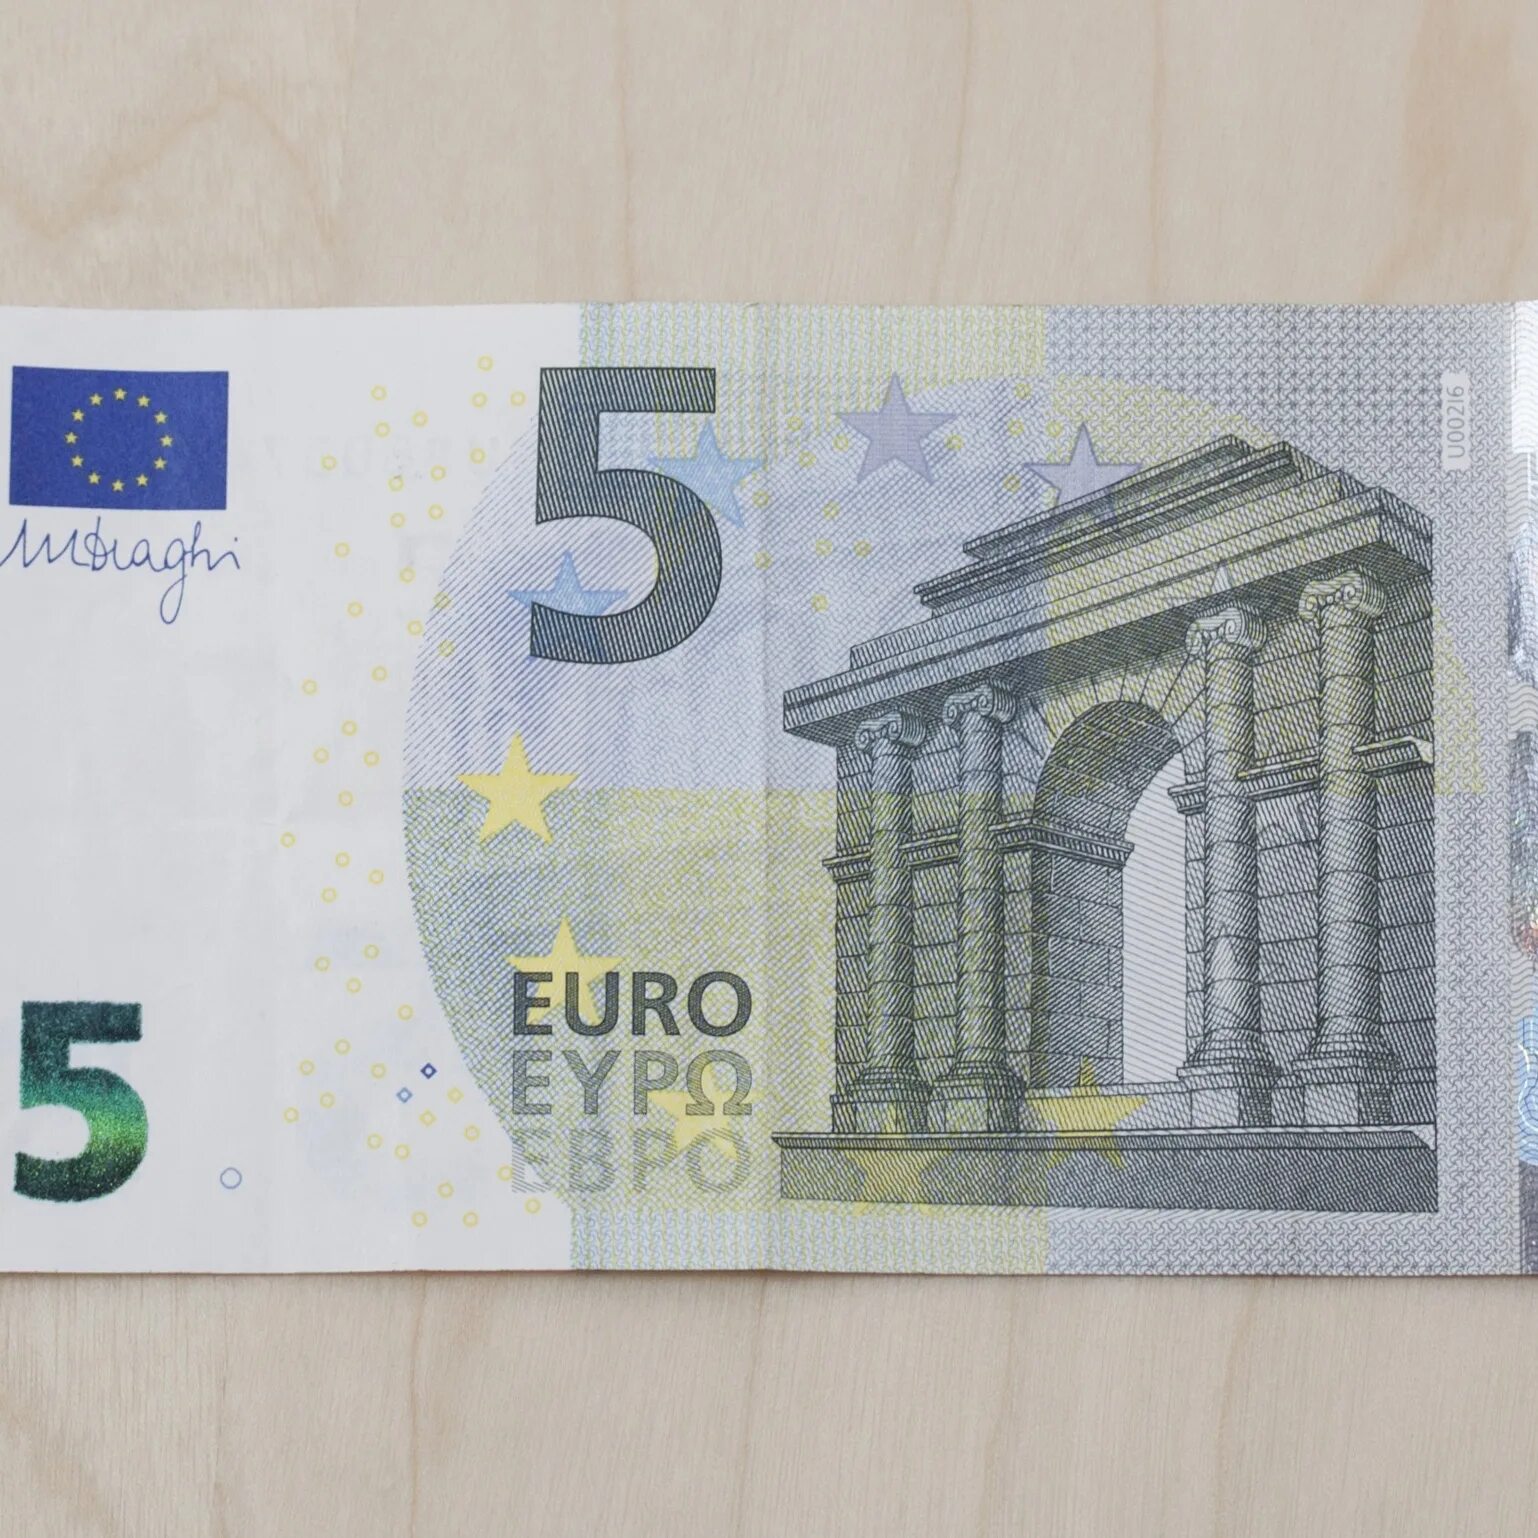 Новая 5 евро